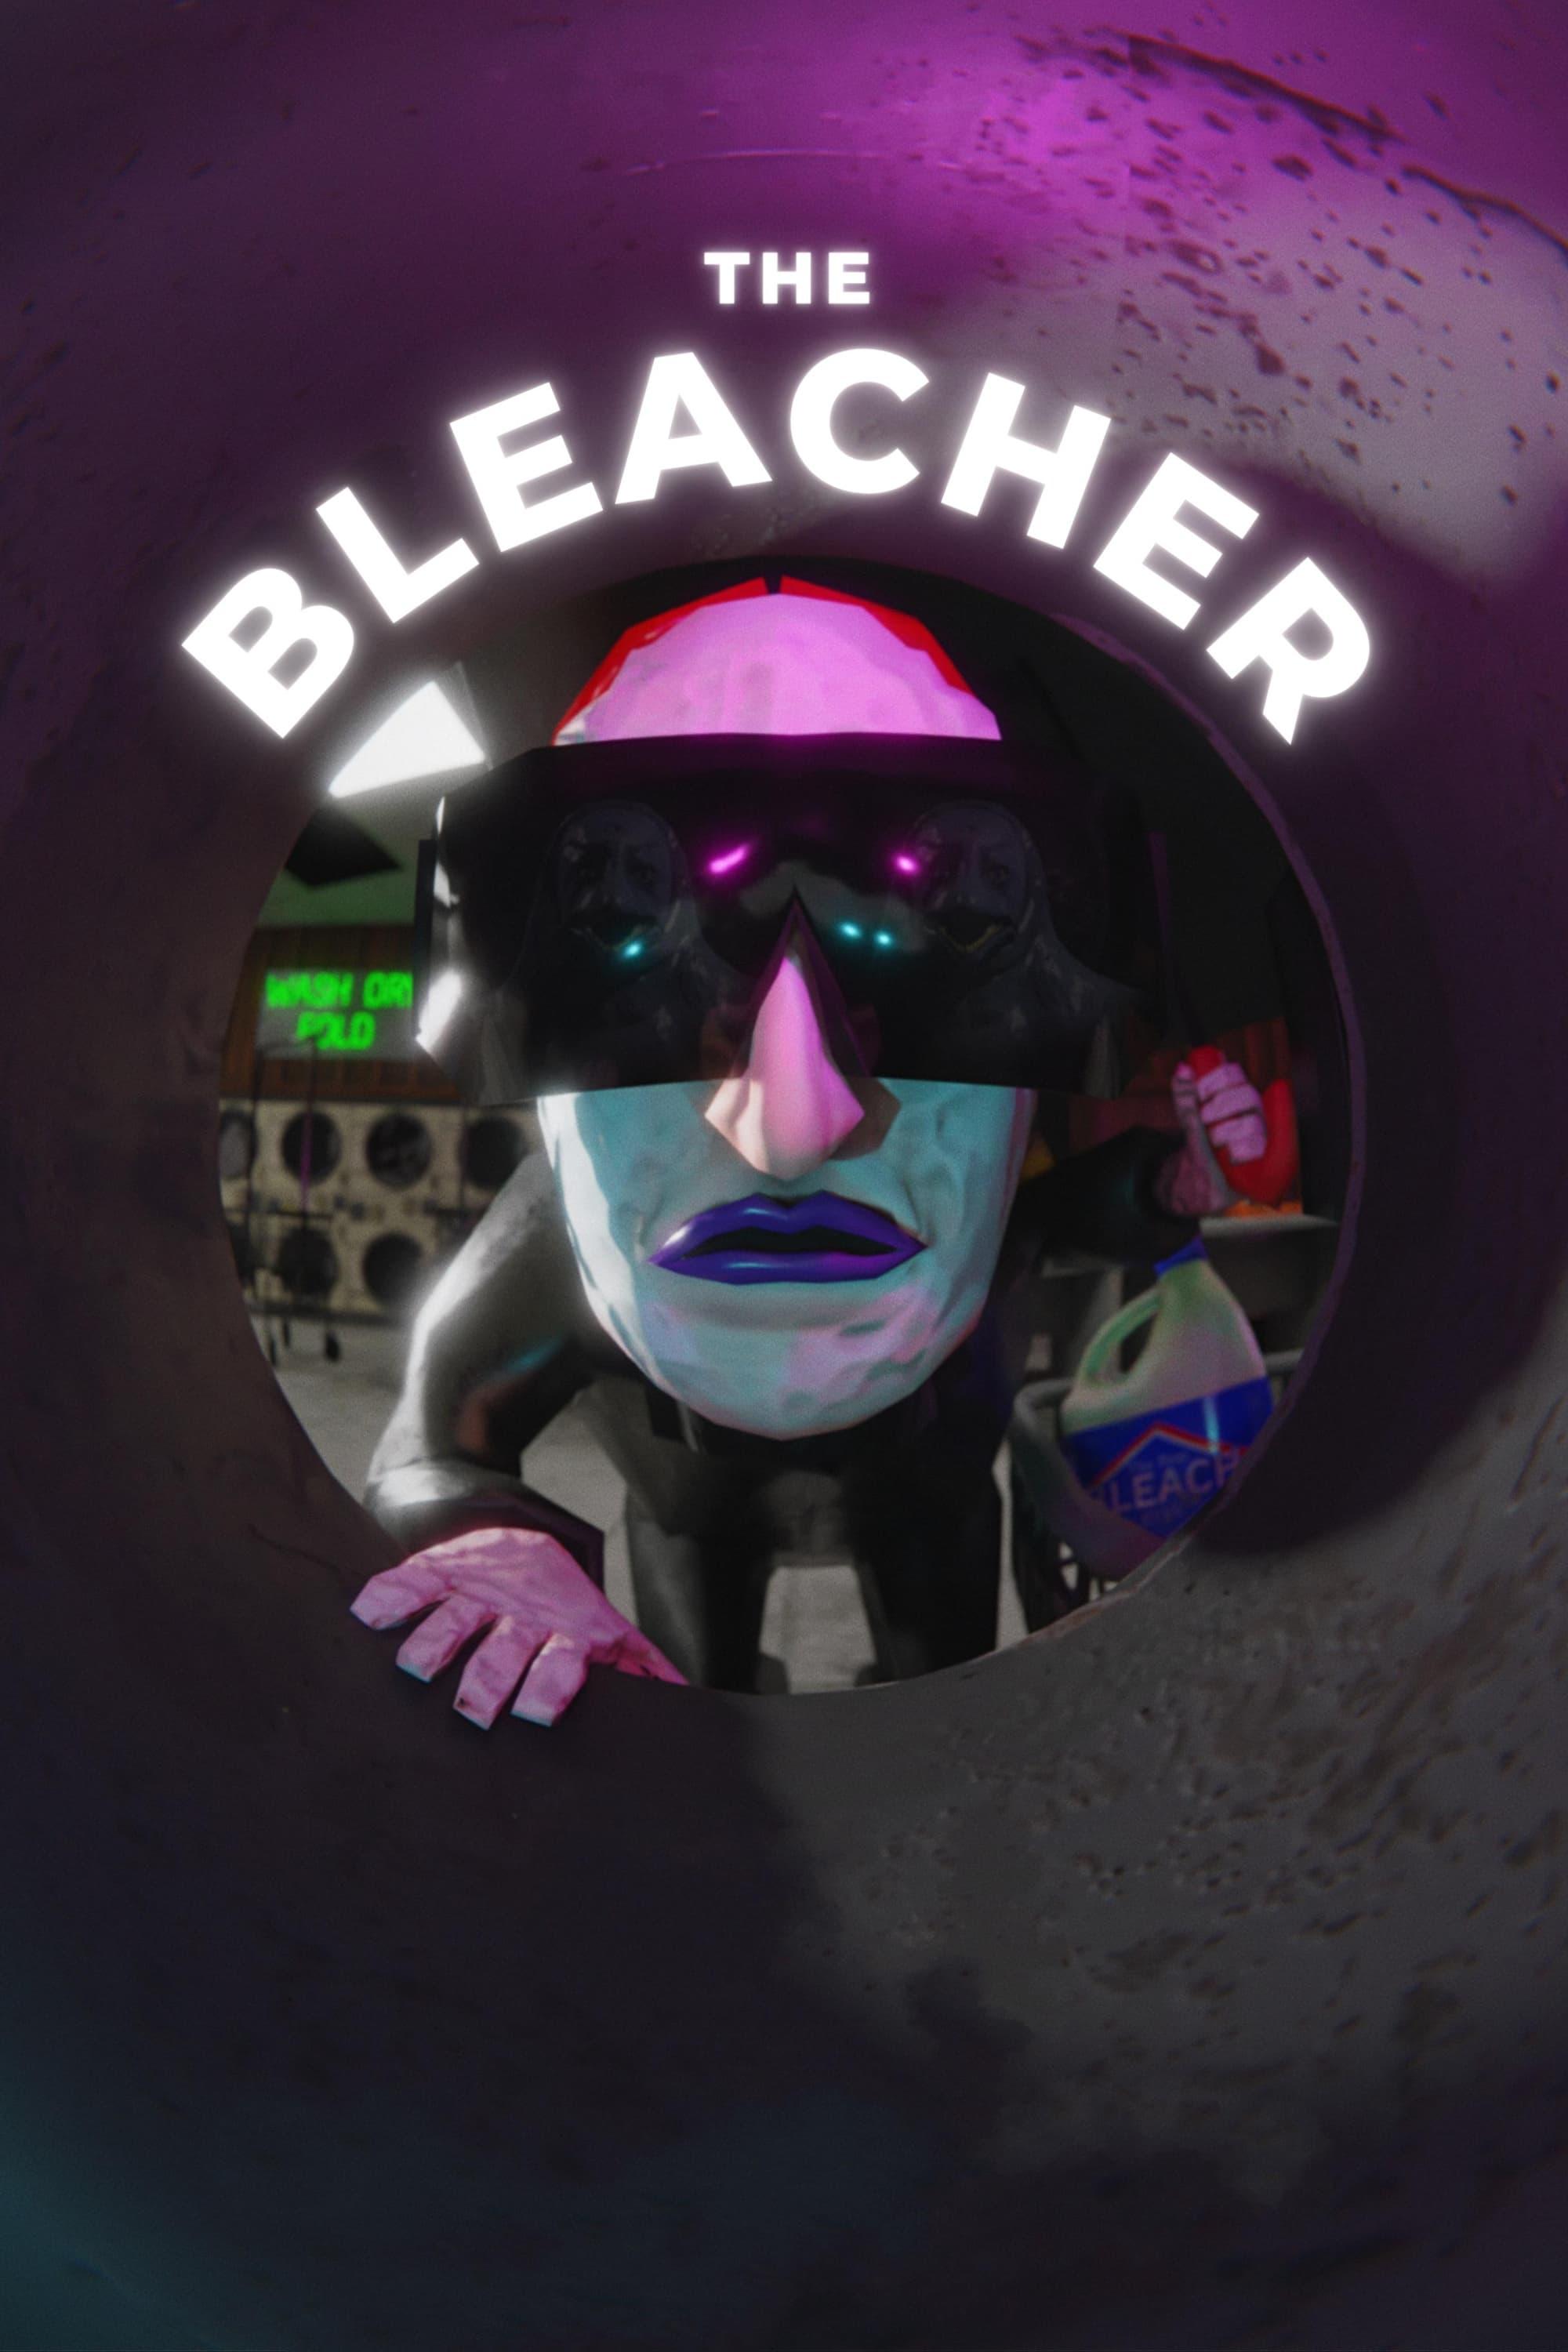 The Bleacher poster